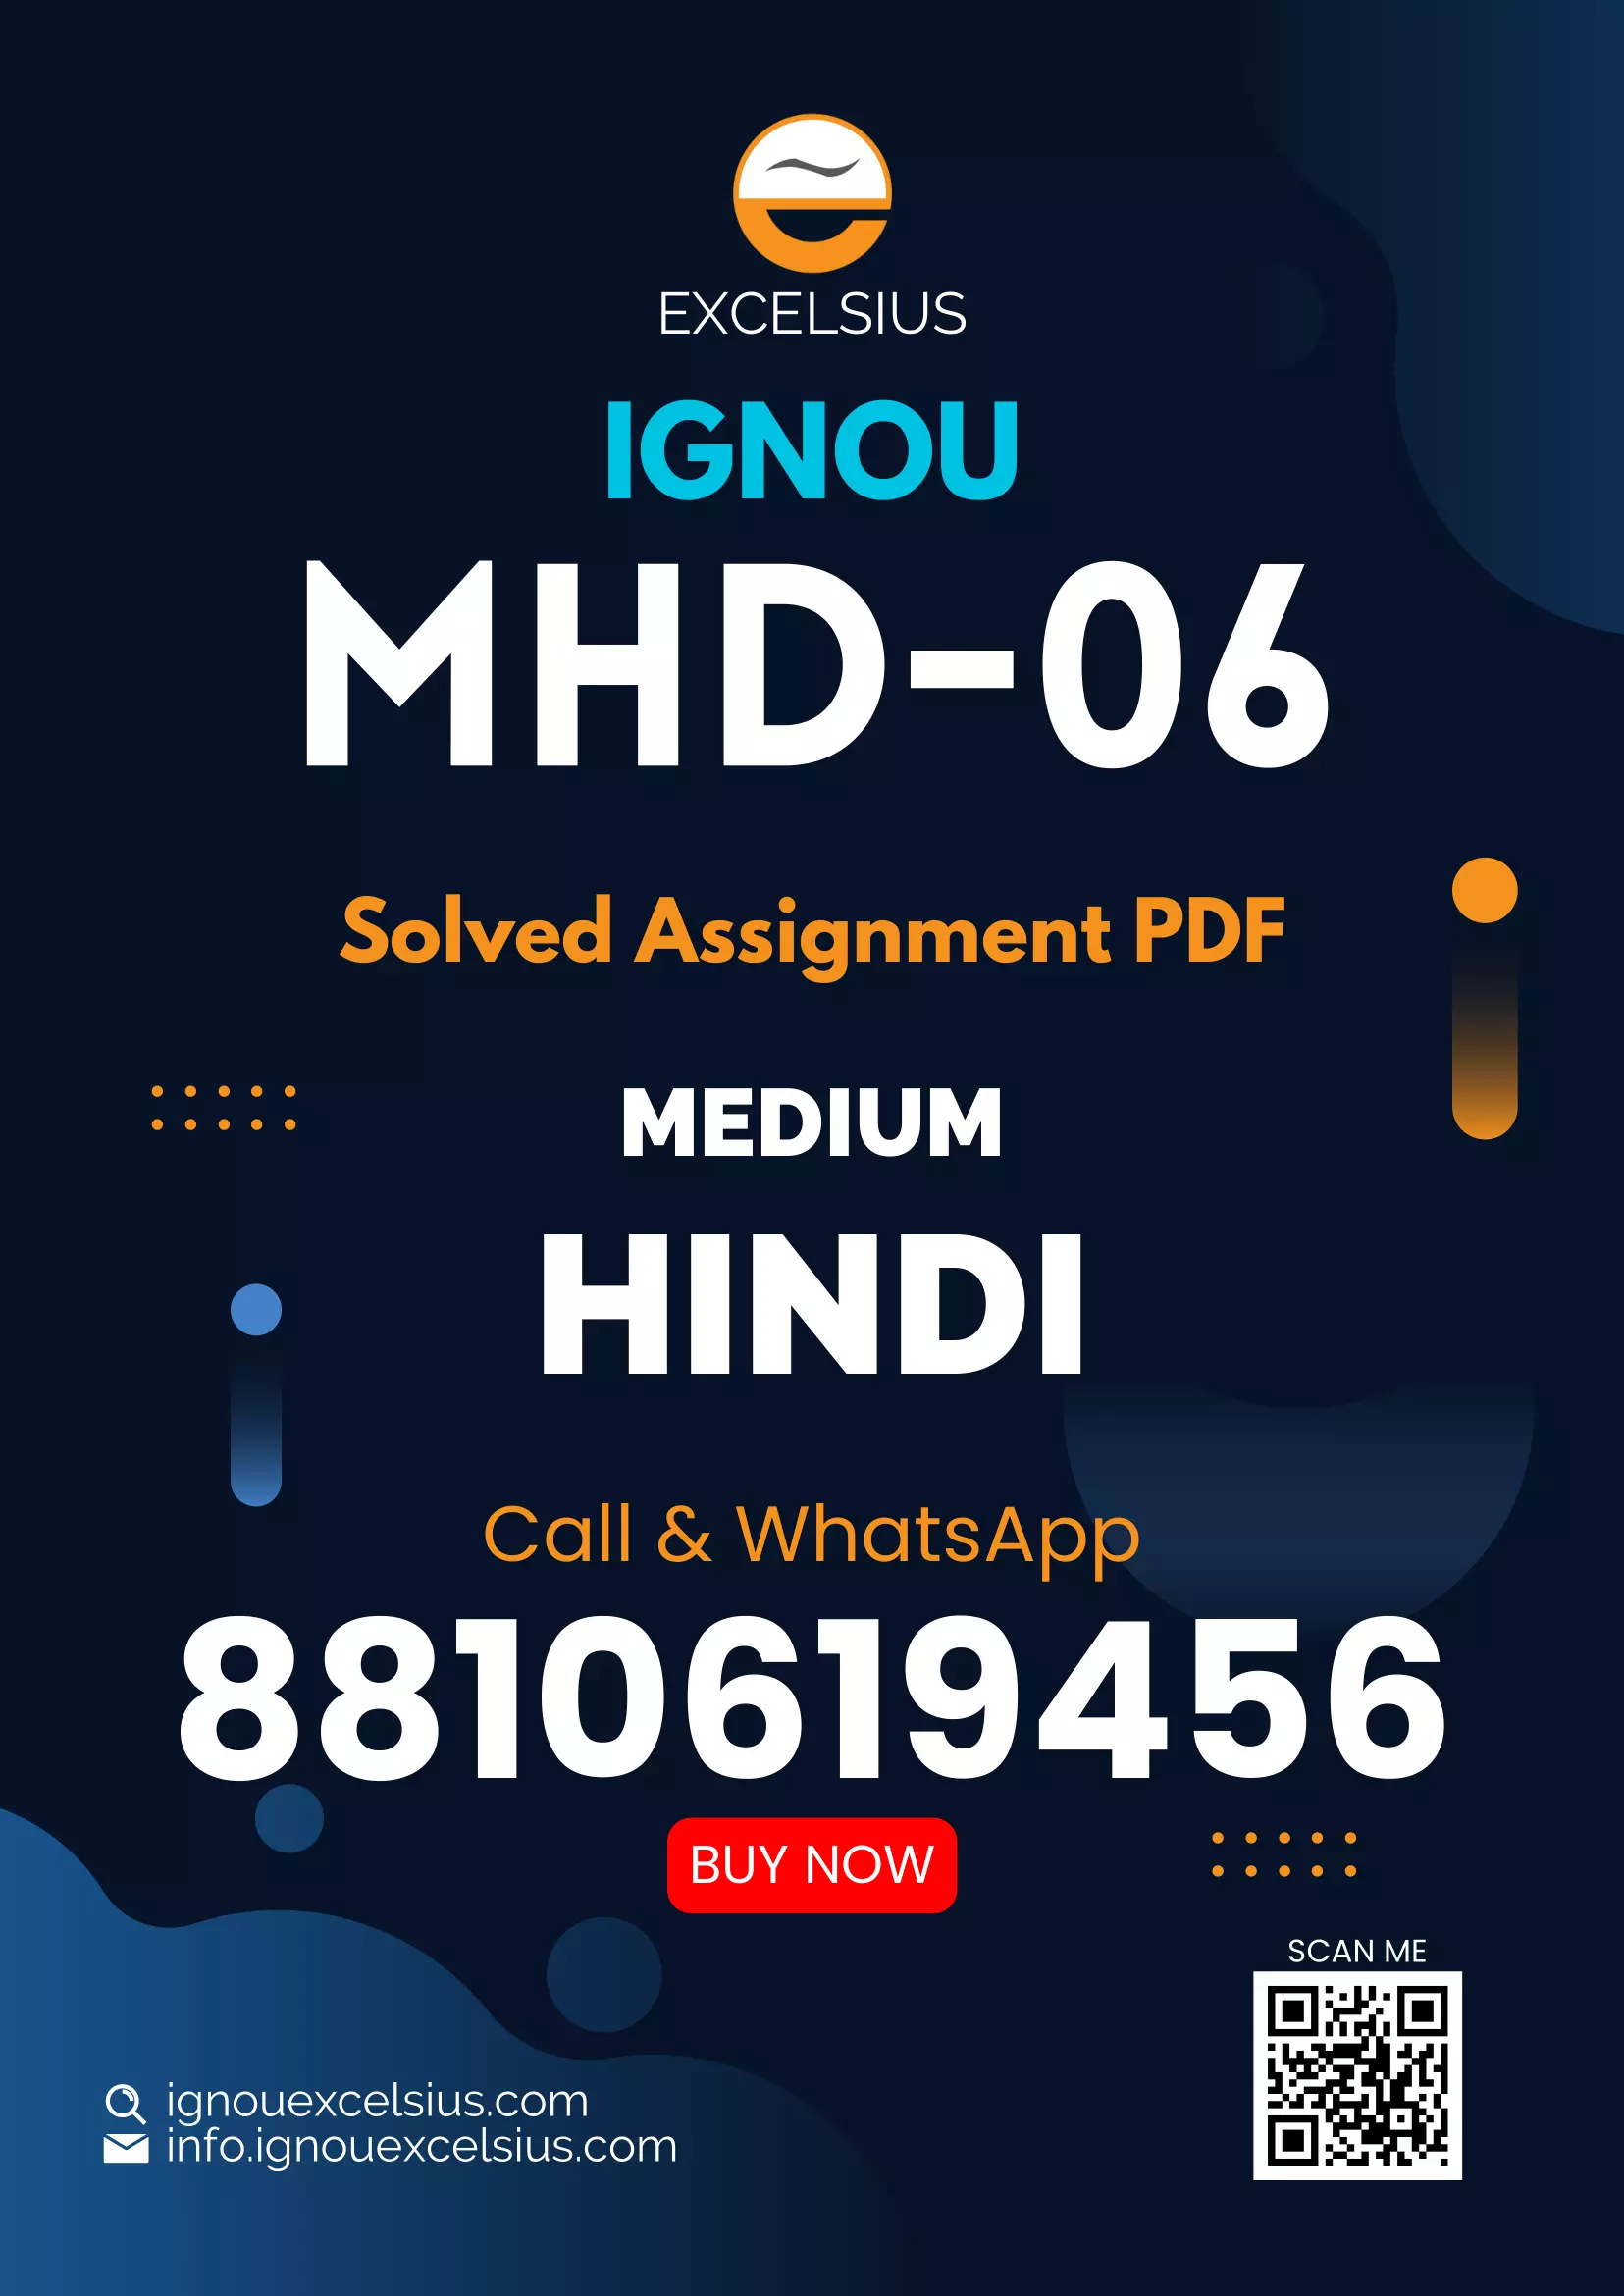 IGNOU MHD-06 - Hindi Bhasha aur Sahitya ka Itihas Latest Solved Assignment-July 2022 – January 2023